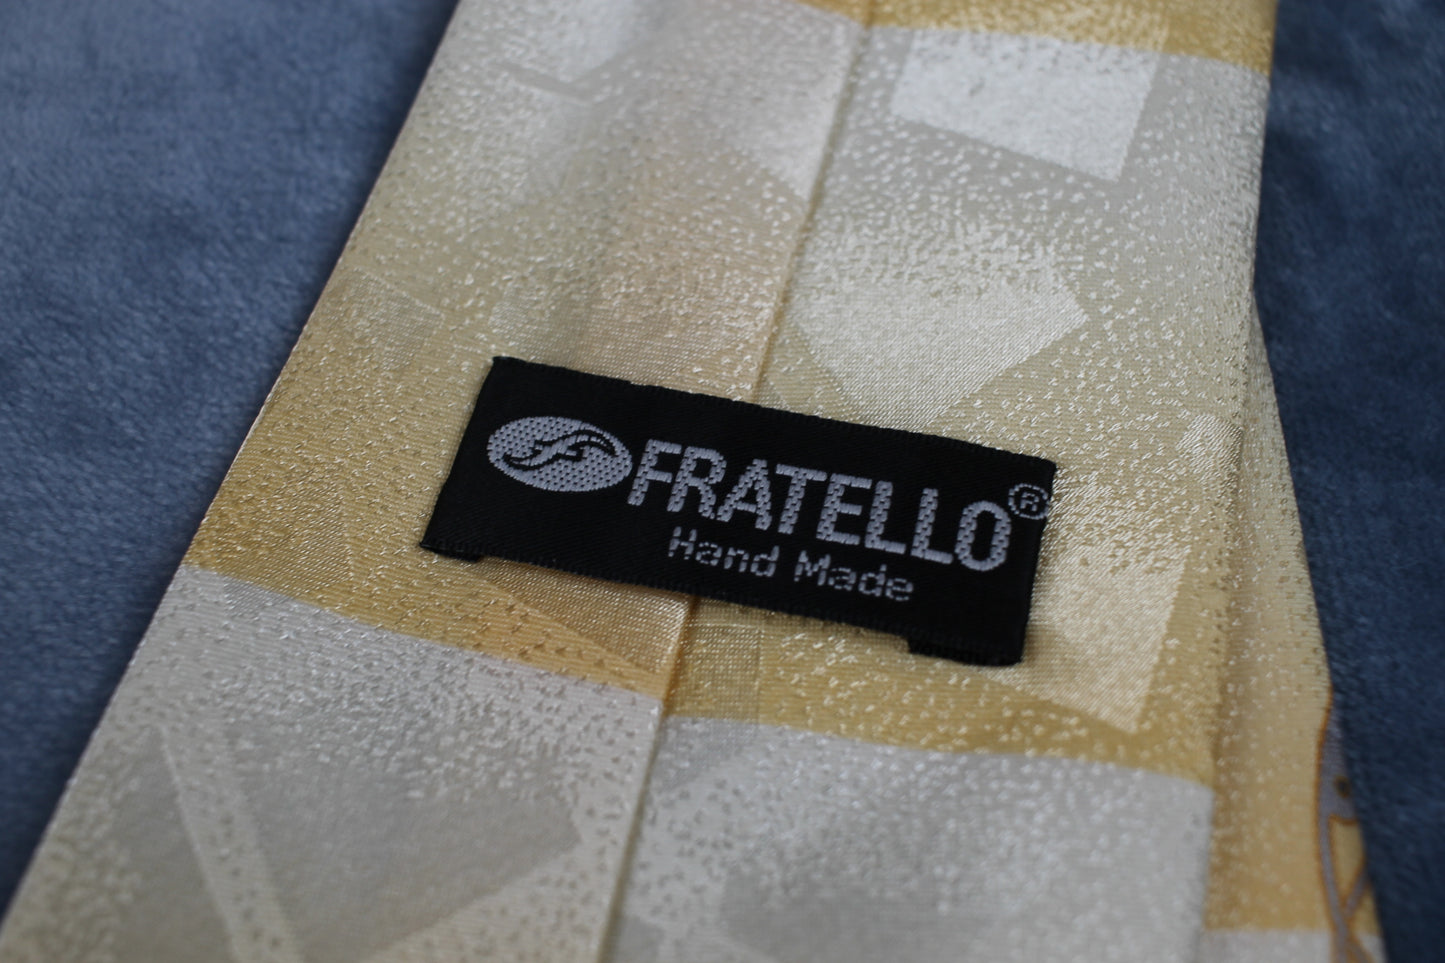 Vintage Fratello Hand Made1940s/50s cream bronze blue pattern swing tie